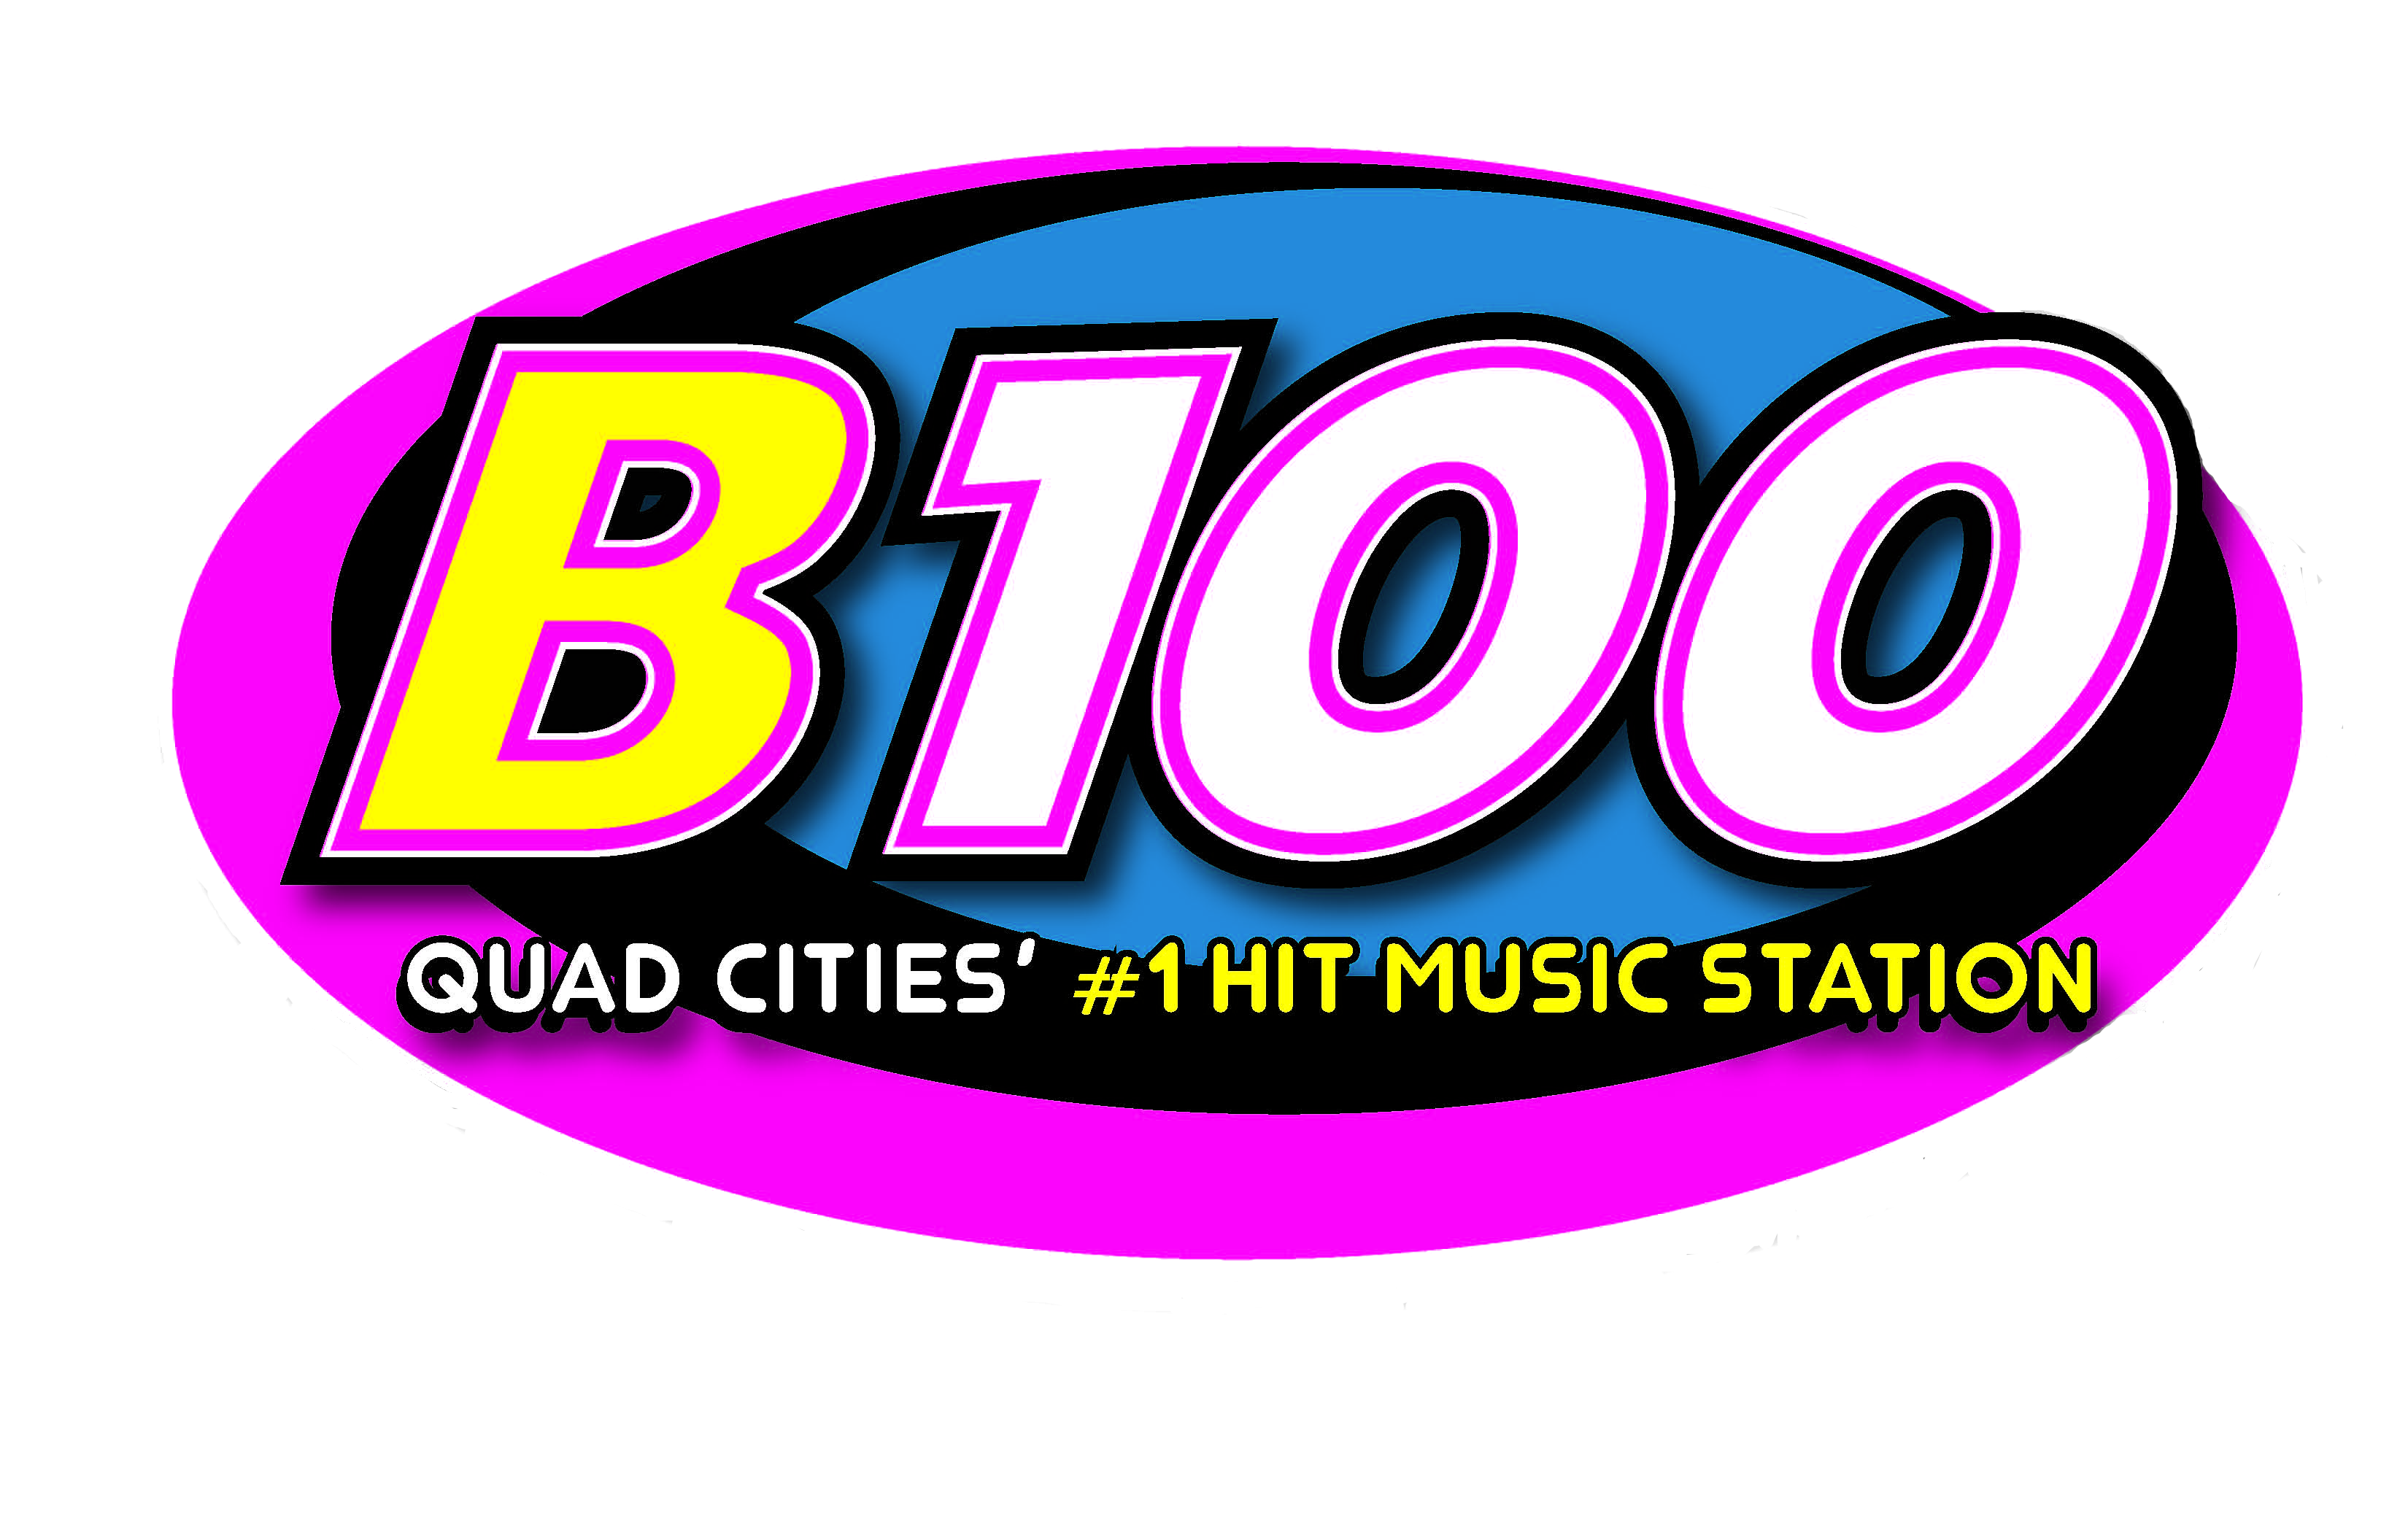 B100 logo theirs